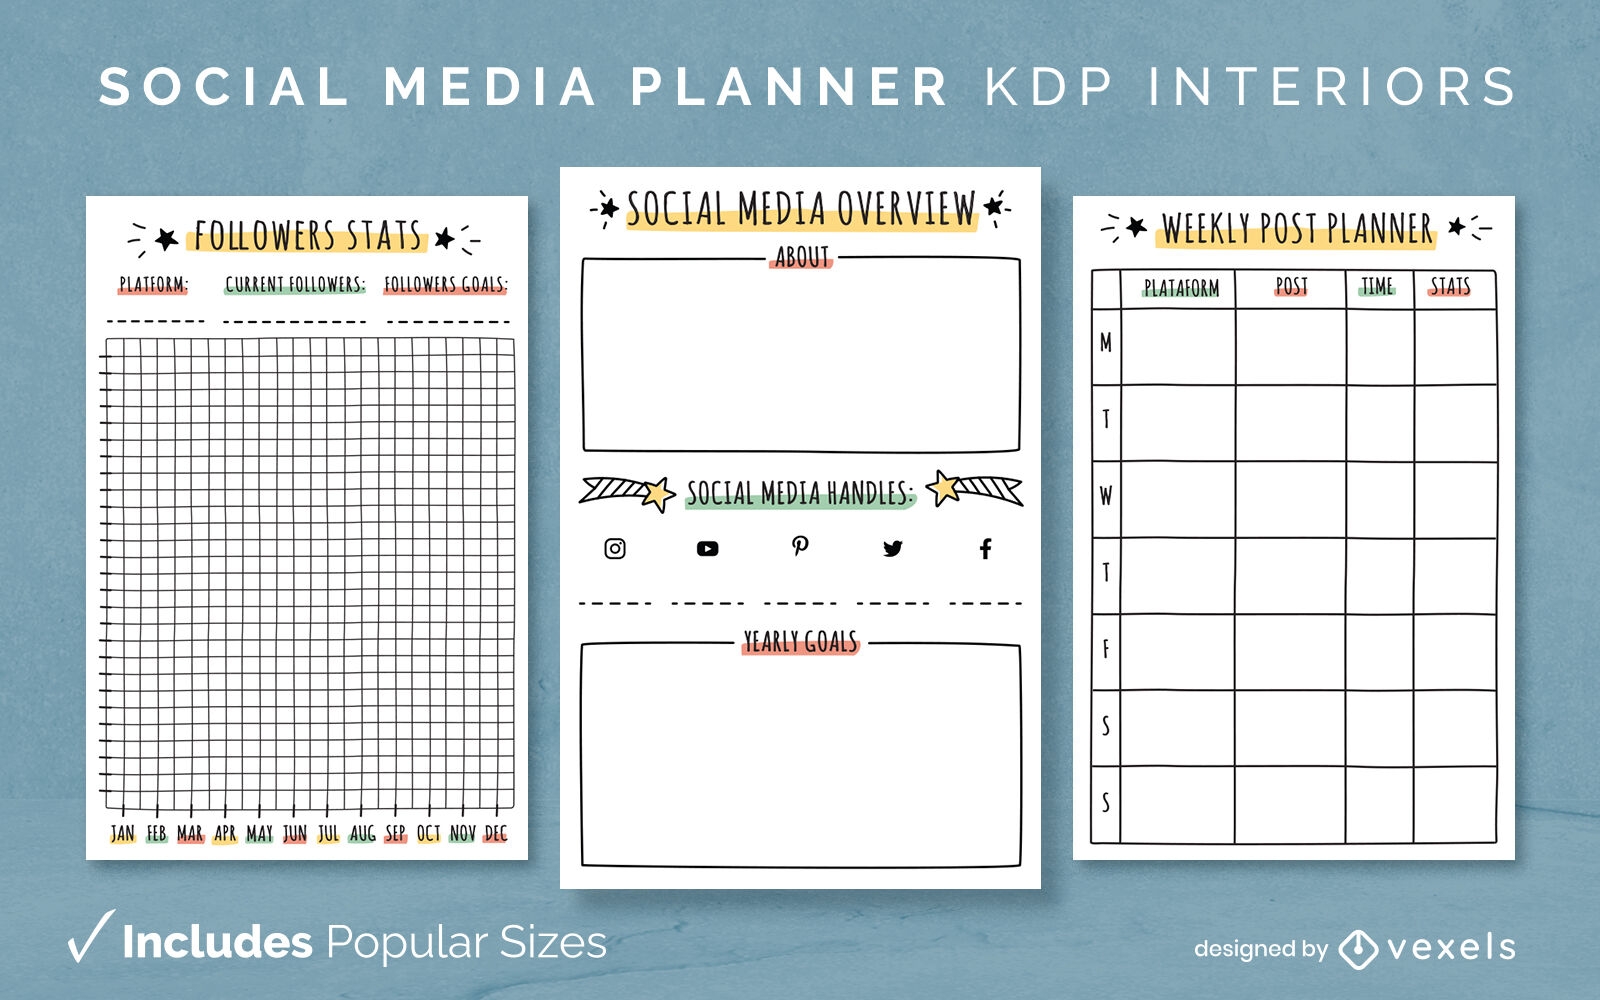 Social media planner template KDP